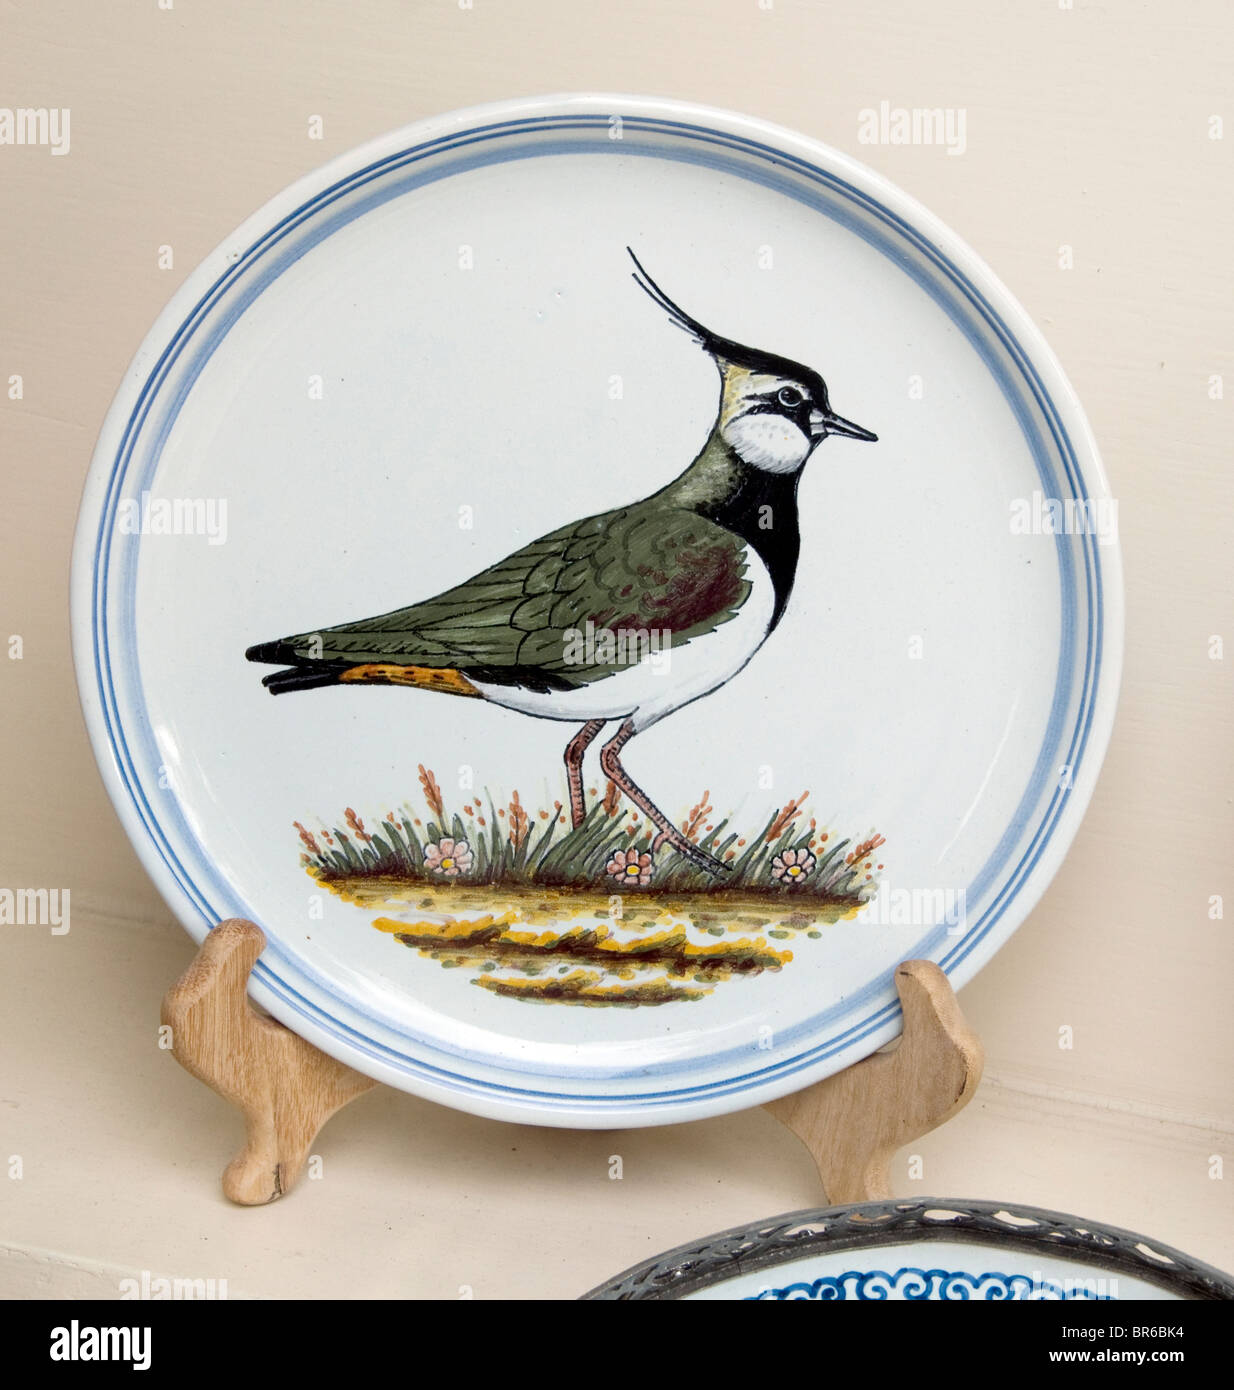 Workum Friesland Netherlands tile plate City Bird lapwing Stock Photo